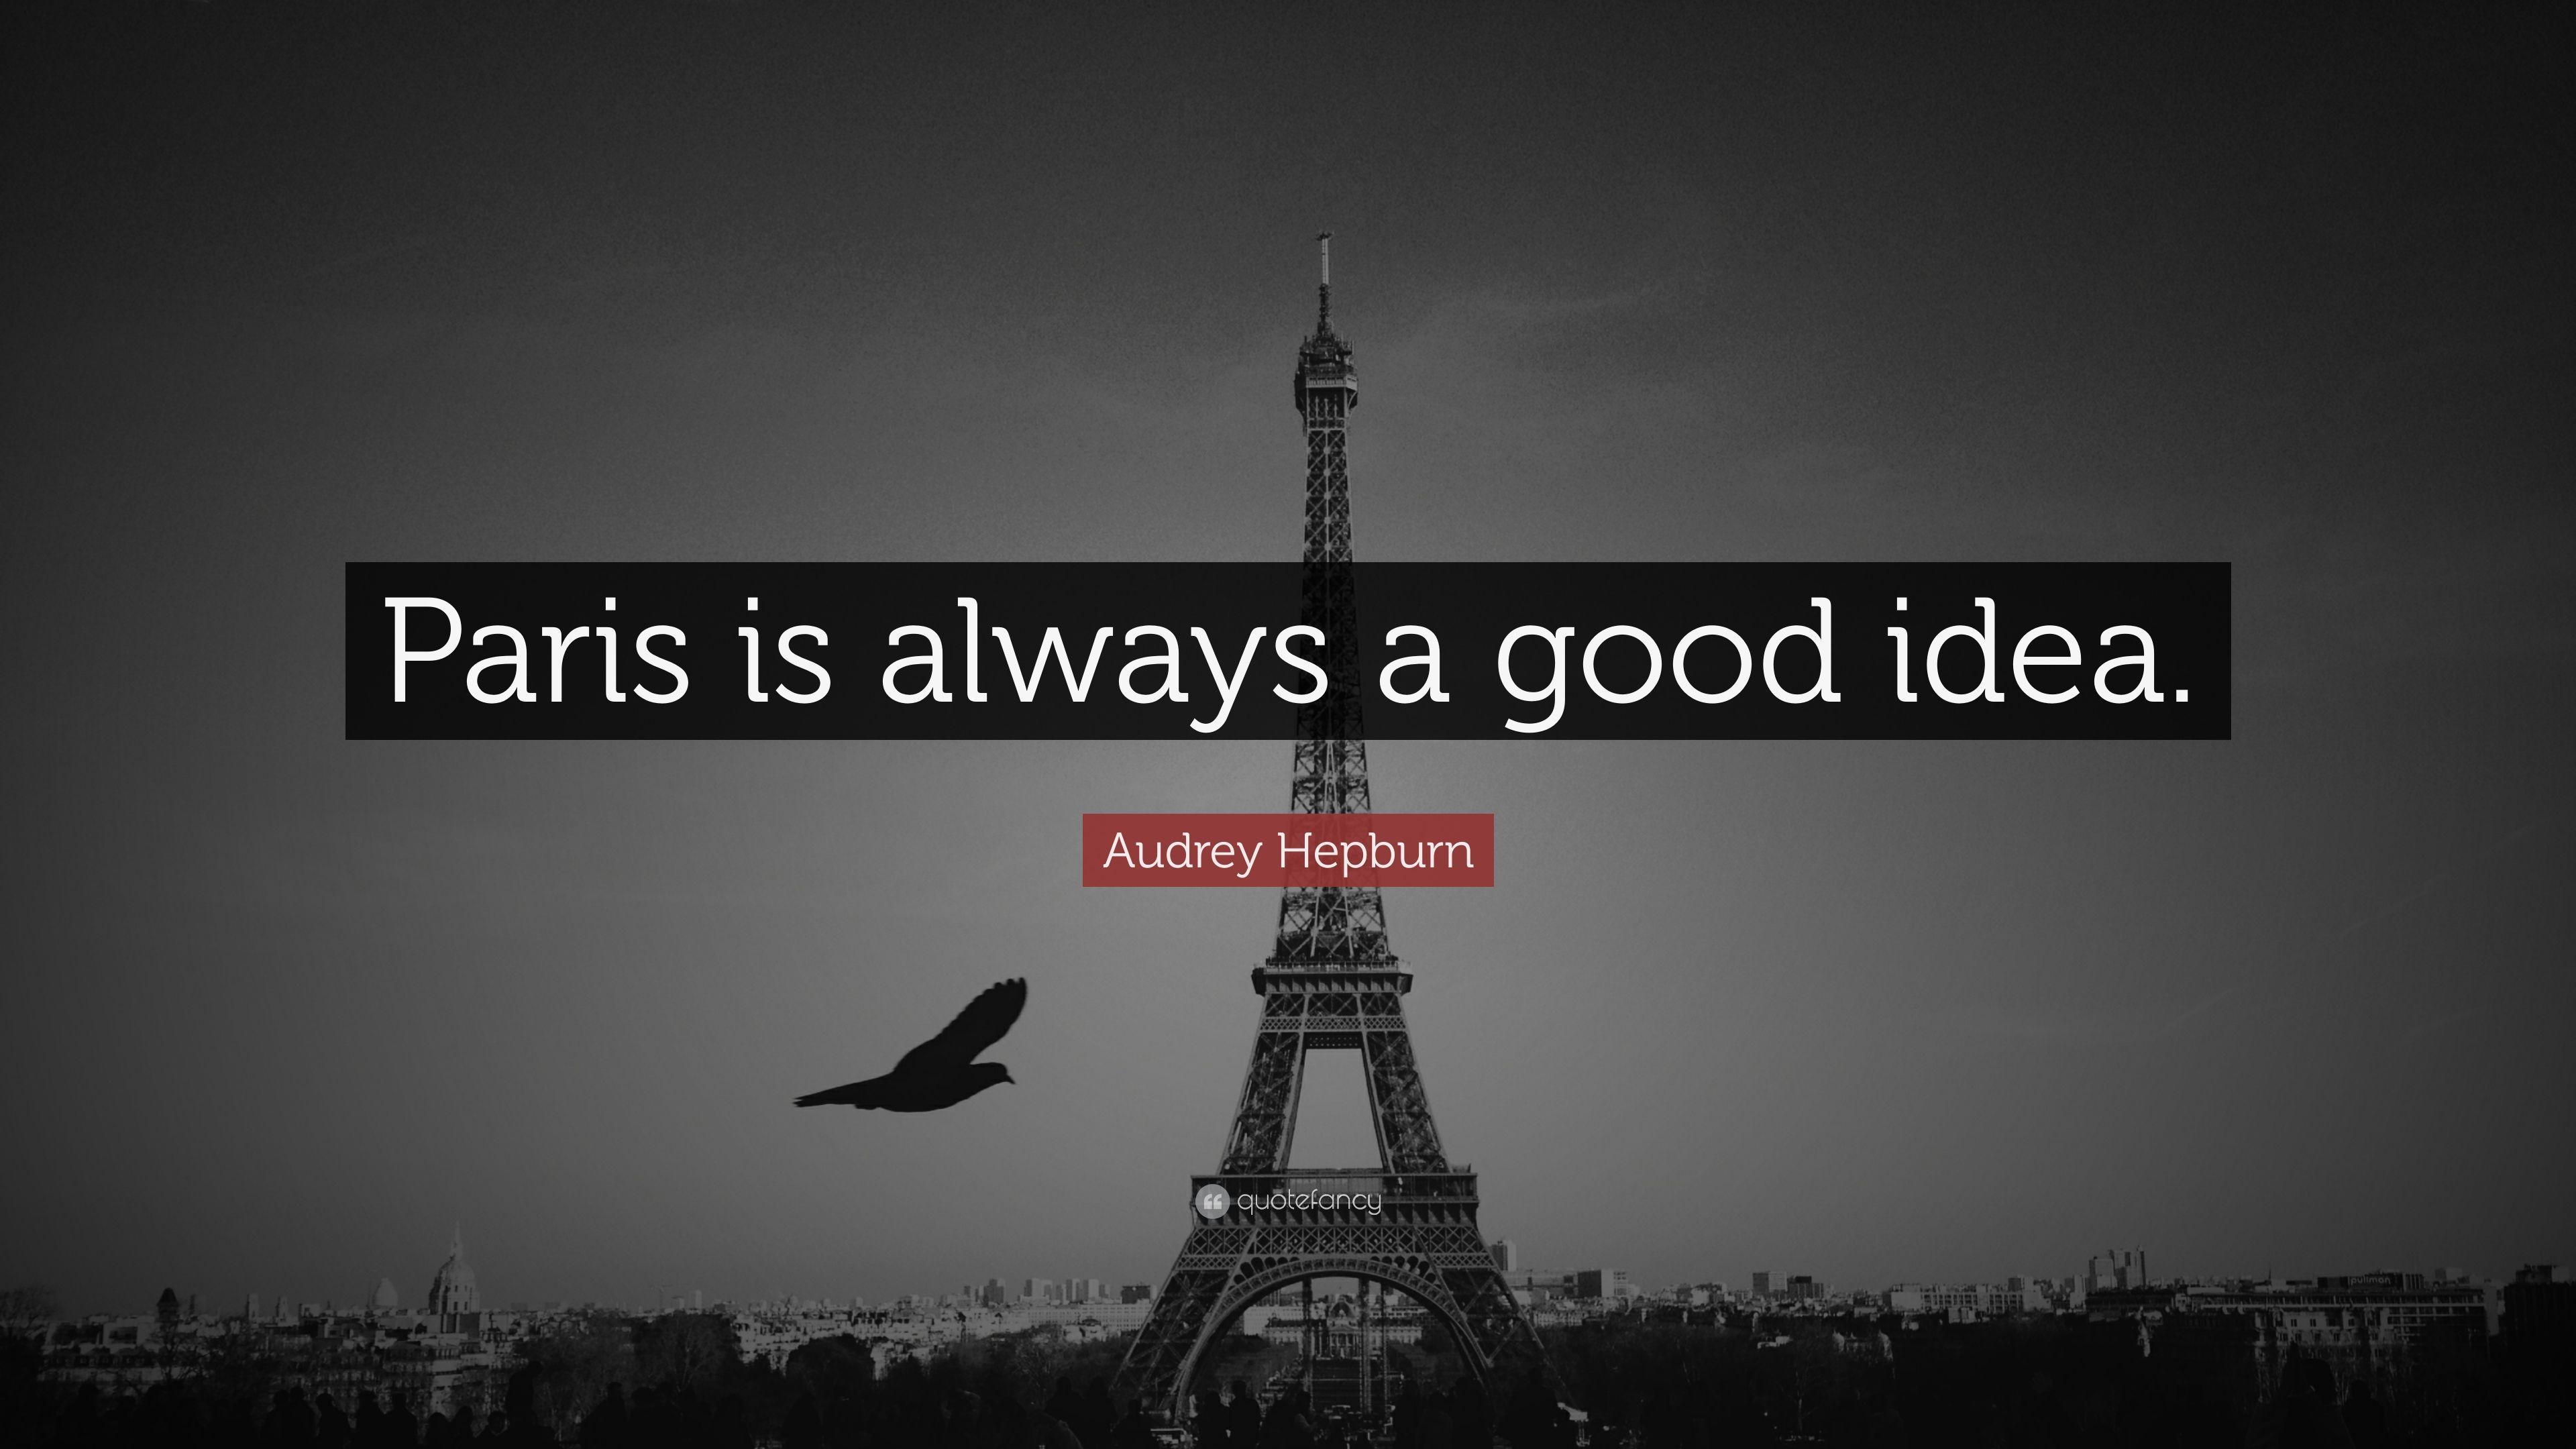 Audrey Hepburn Quote: “Paris is always a good idea.” 11 wallpaper